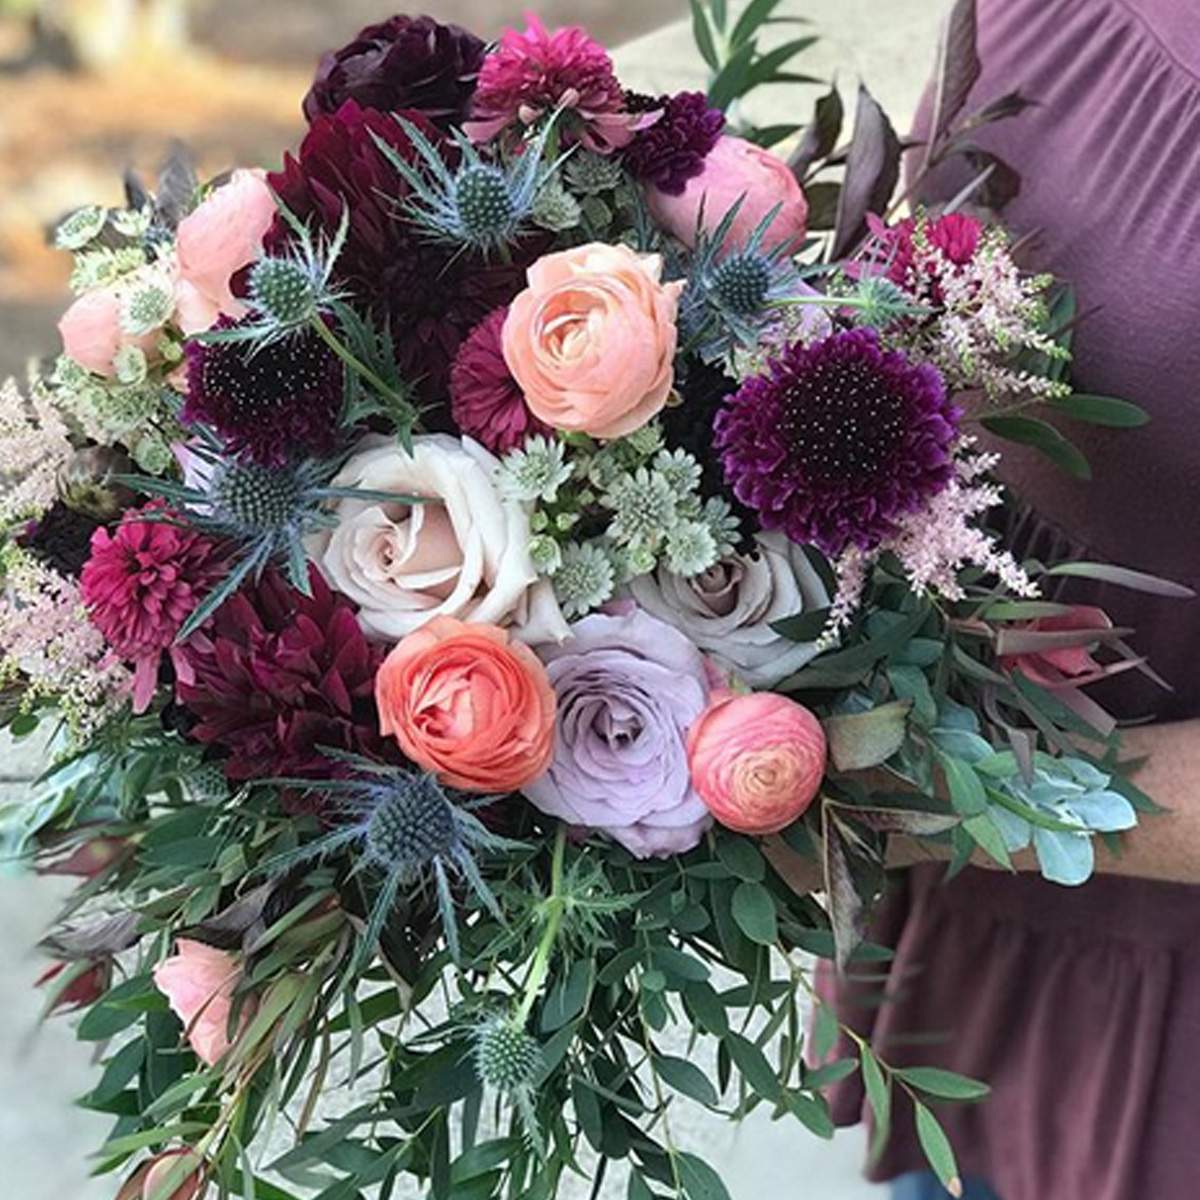 fancy_florals_by_nancy_florist_featured_on_thursd